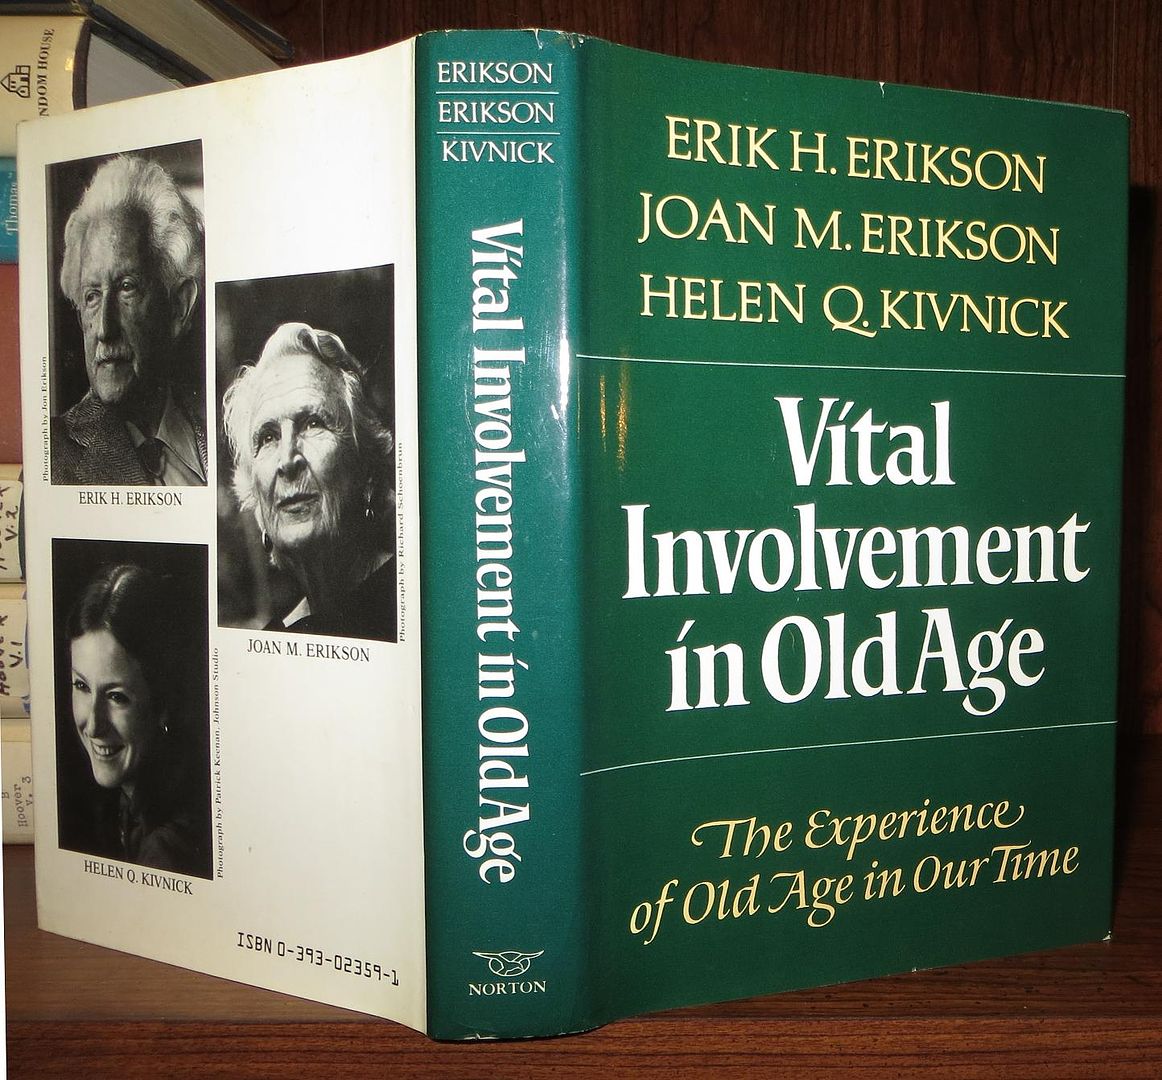 ERIKSON, ERIK H. & JOAN M. ERIKSON & HELEN Q KIVNICK - Vital Involvement in Old Age